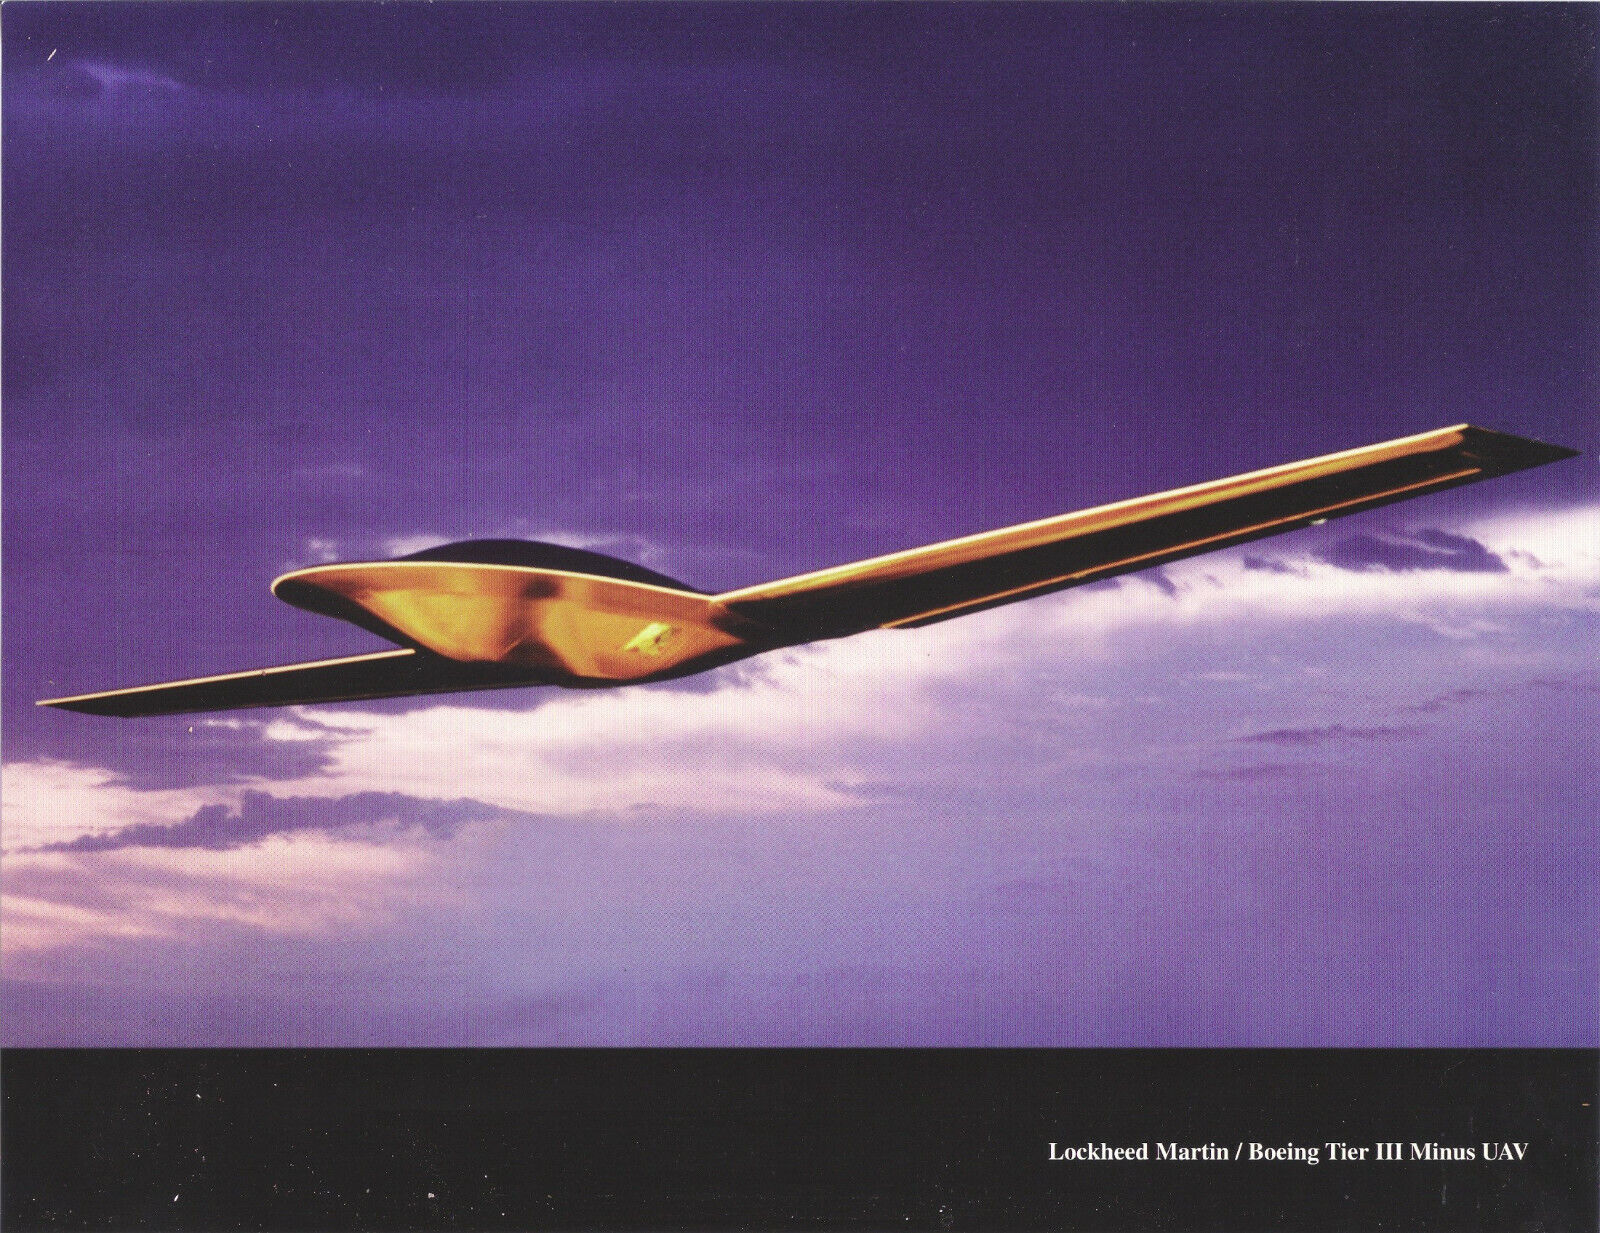 Lockheed Martin / Boeing Tier III Minus UAV spec sheet